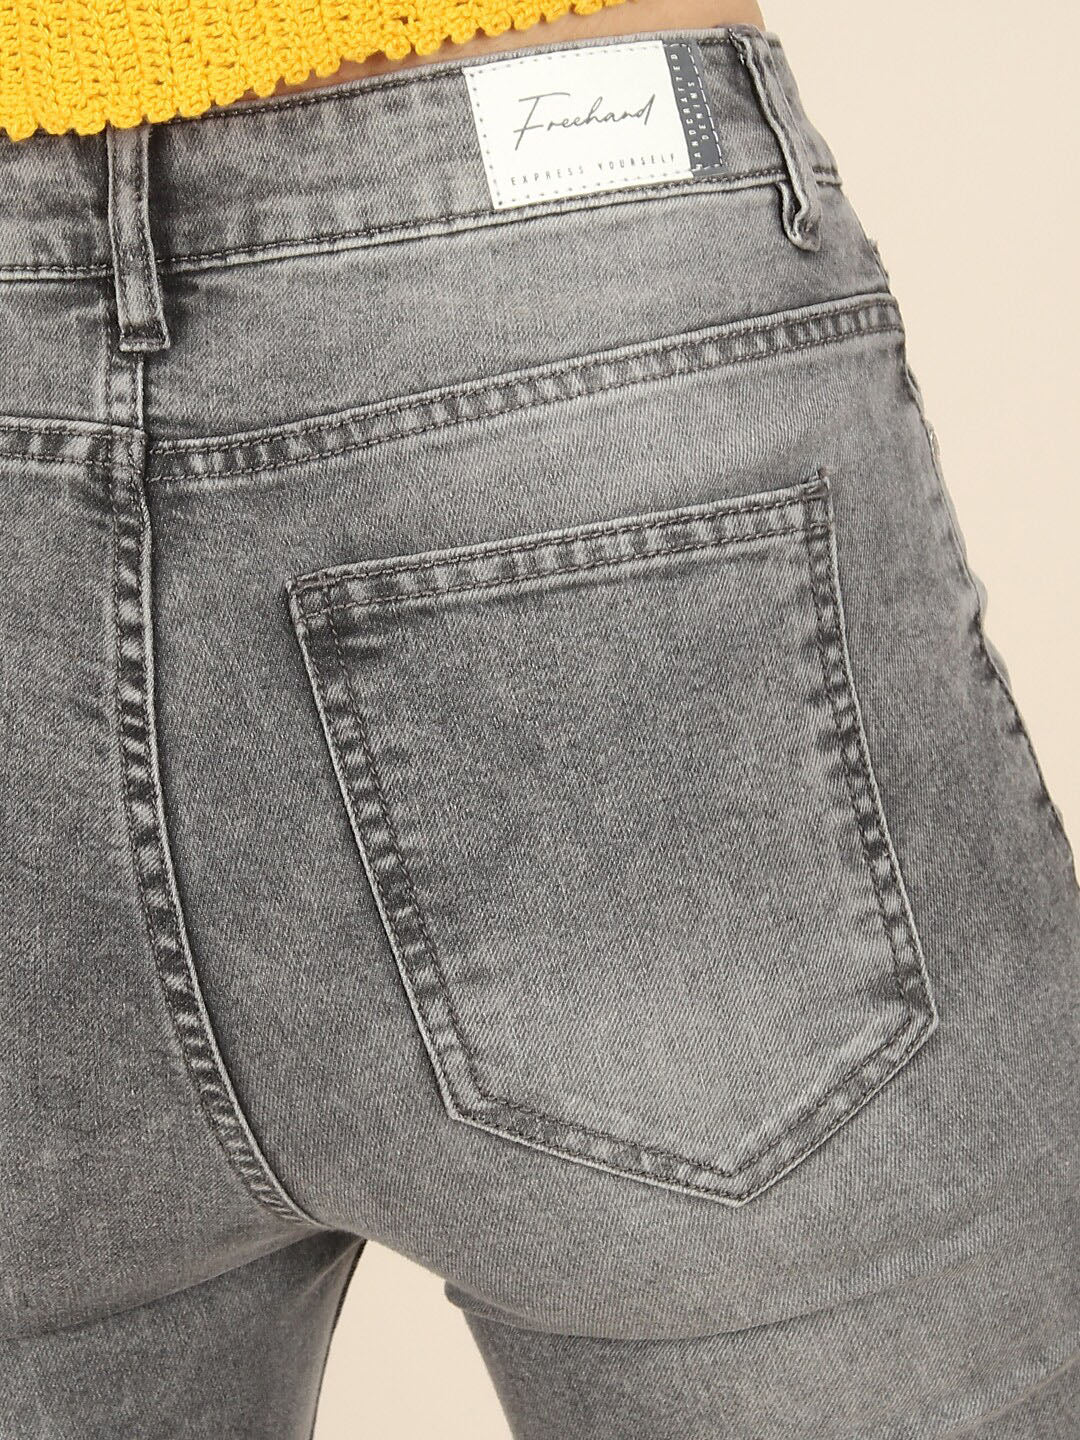 Shop Women Distress Straight Fit Jeans Online.